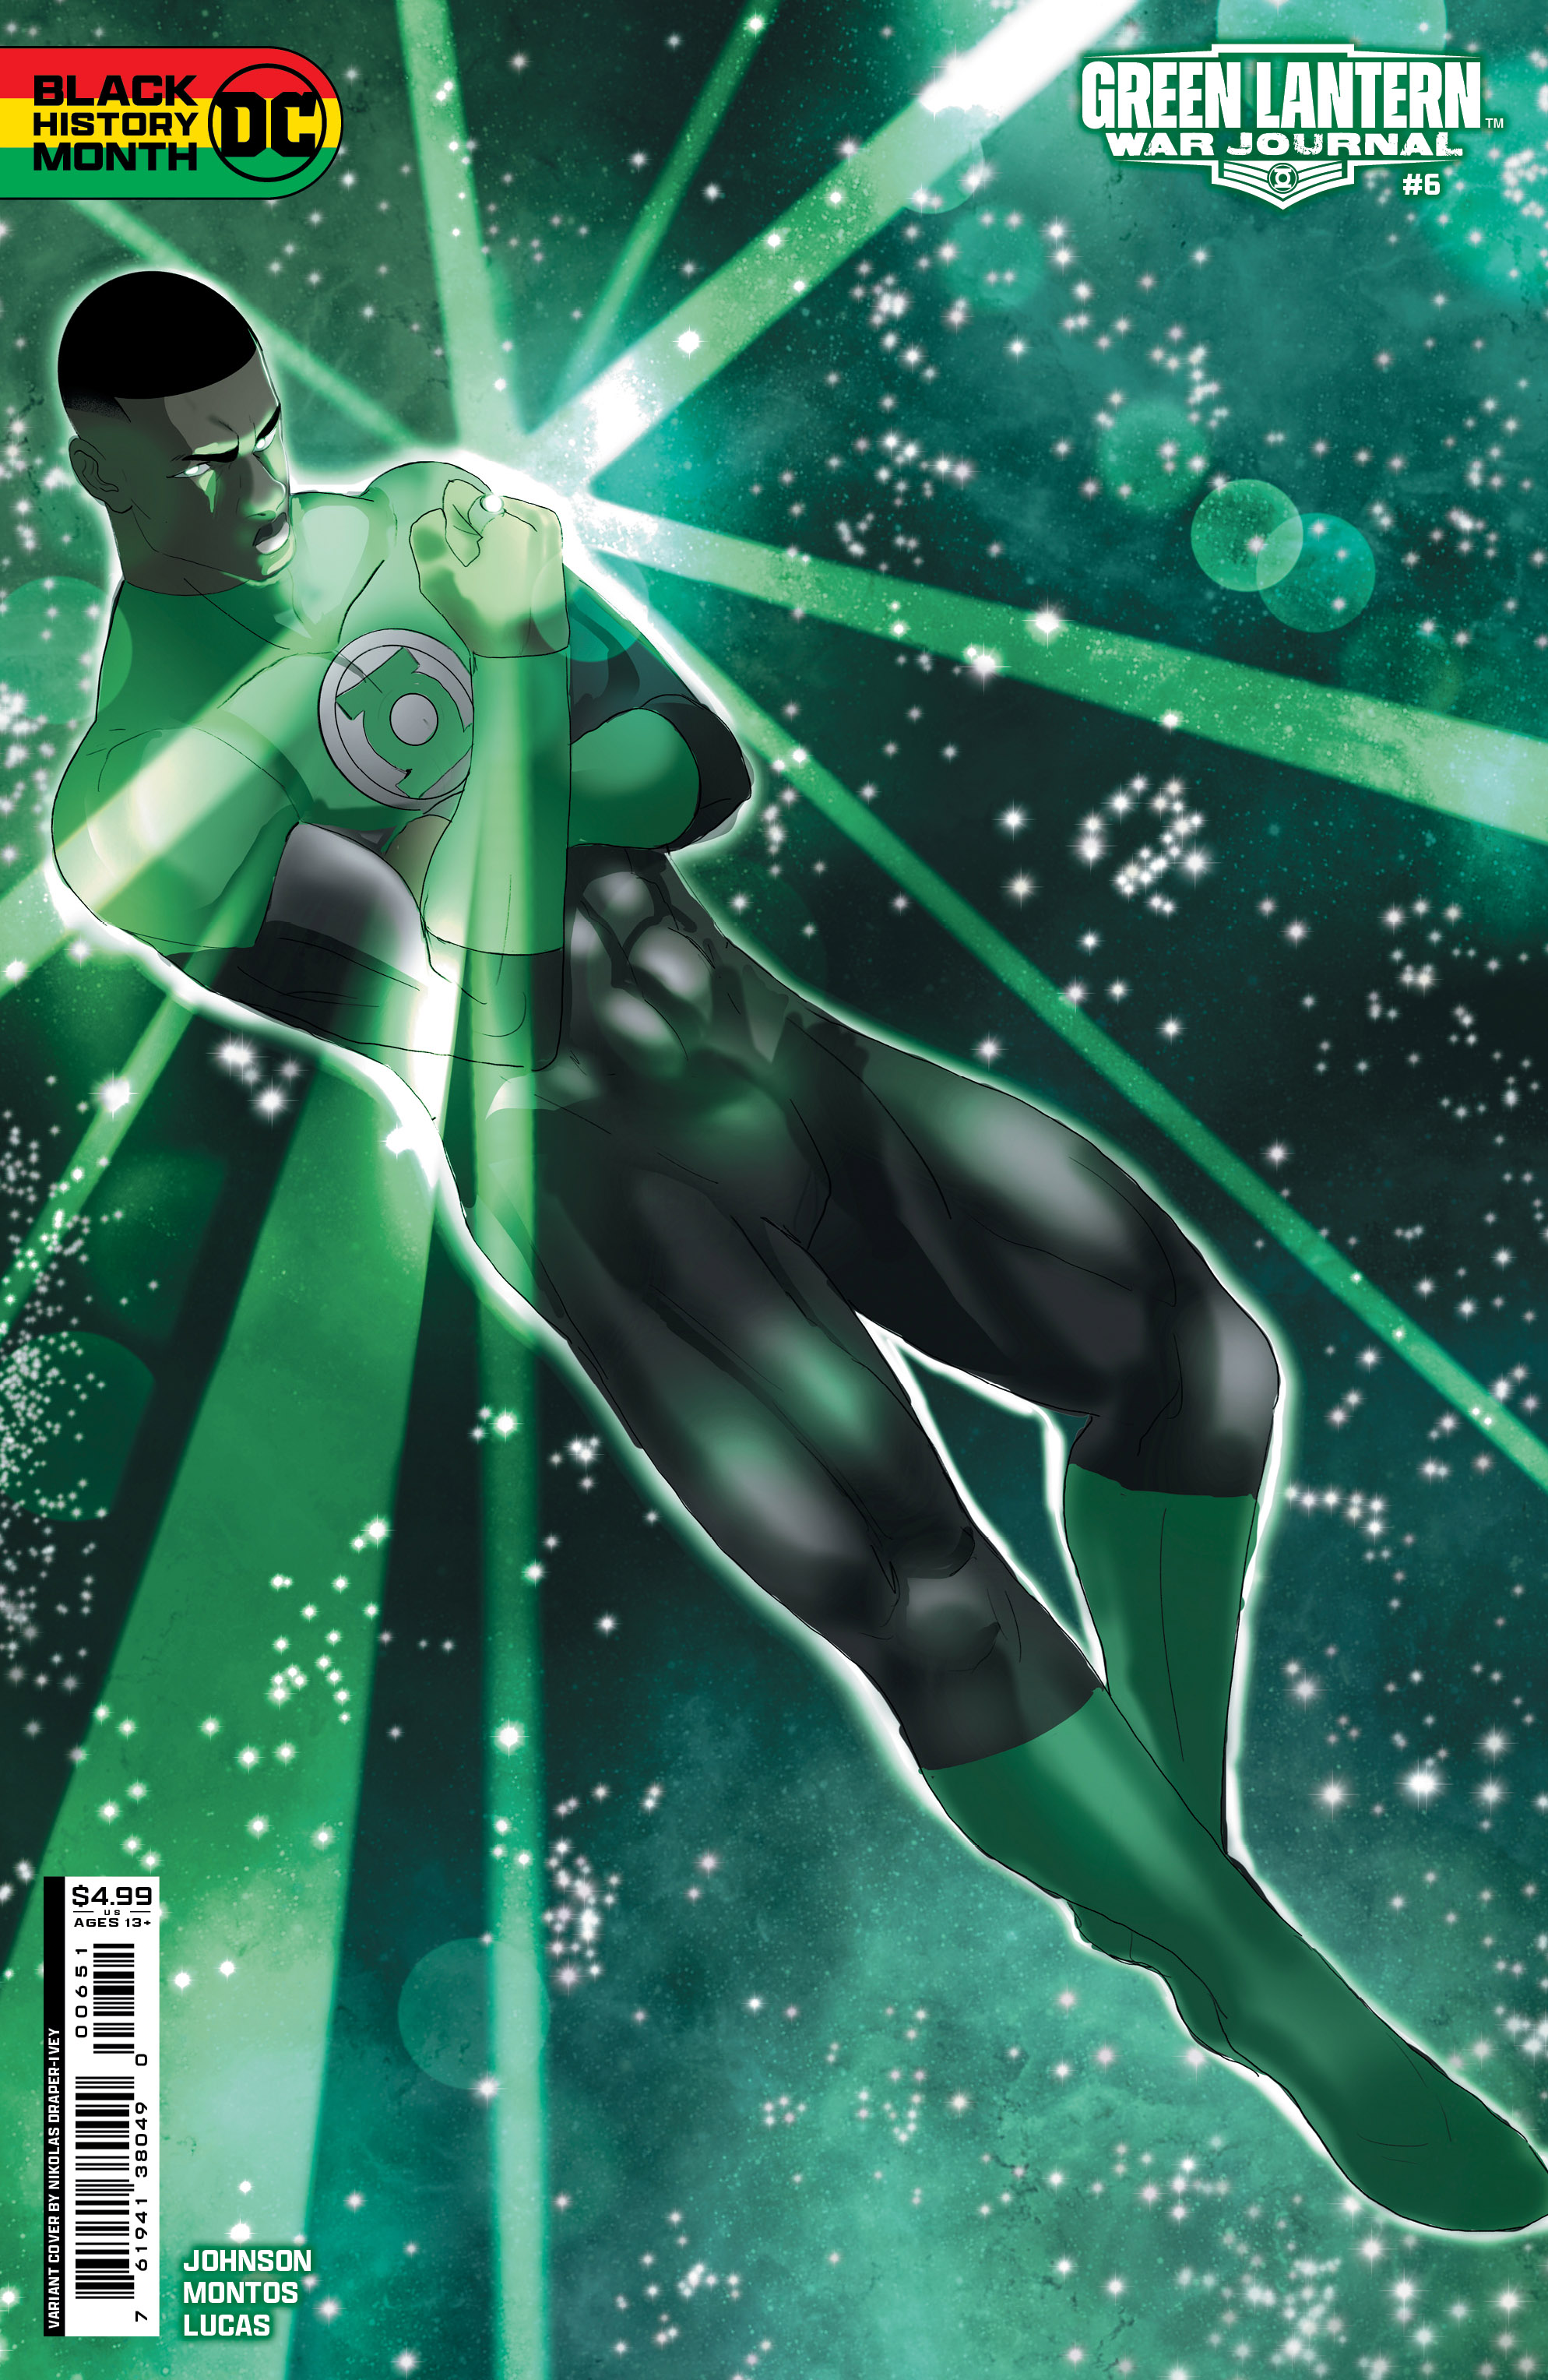 Green Lantern War Journal #6 Cover C Nikolas Draper-Ivey Black History Month Card Stock Variant